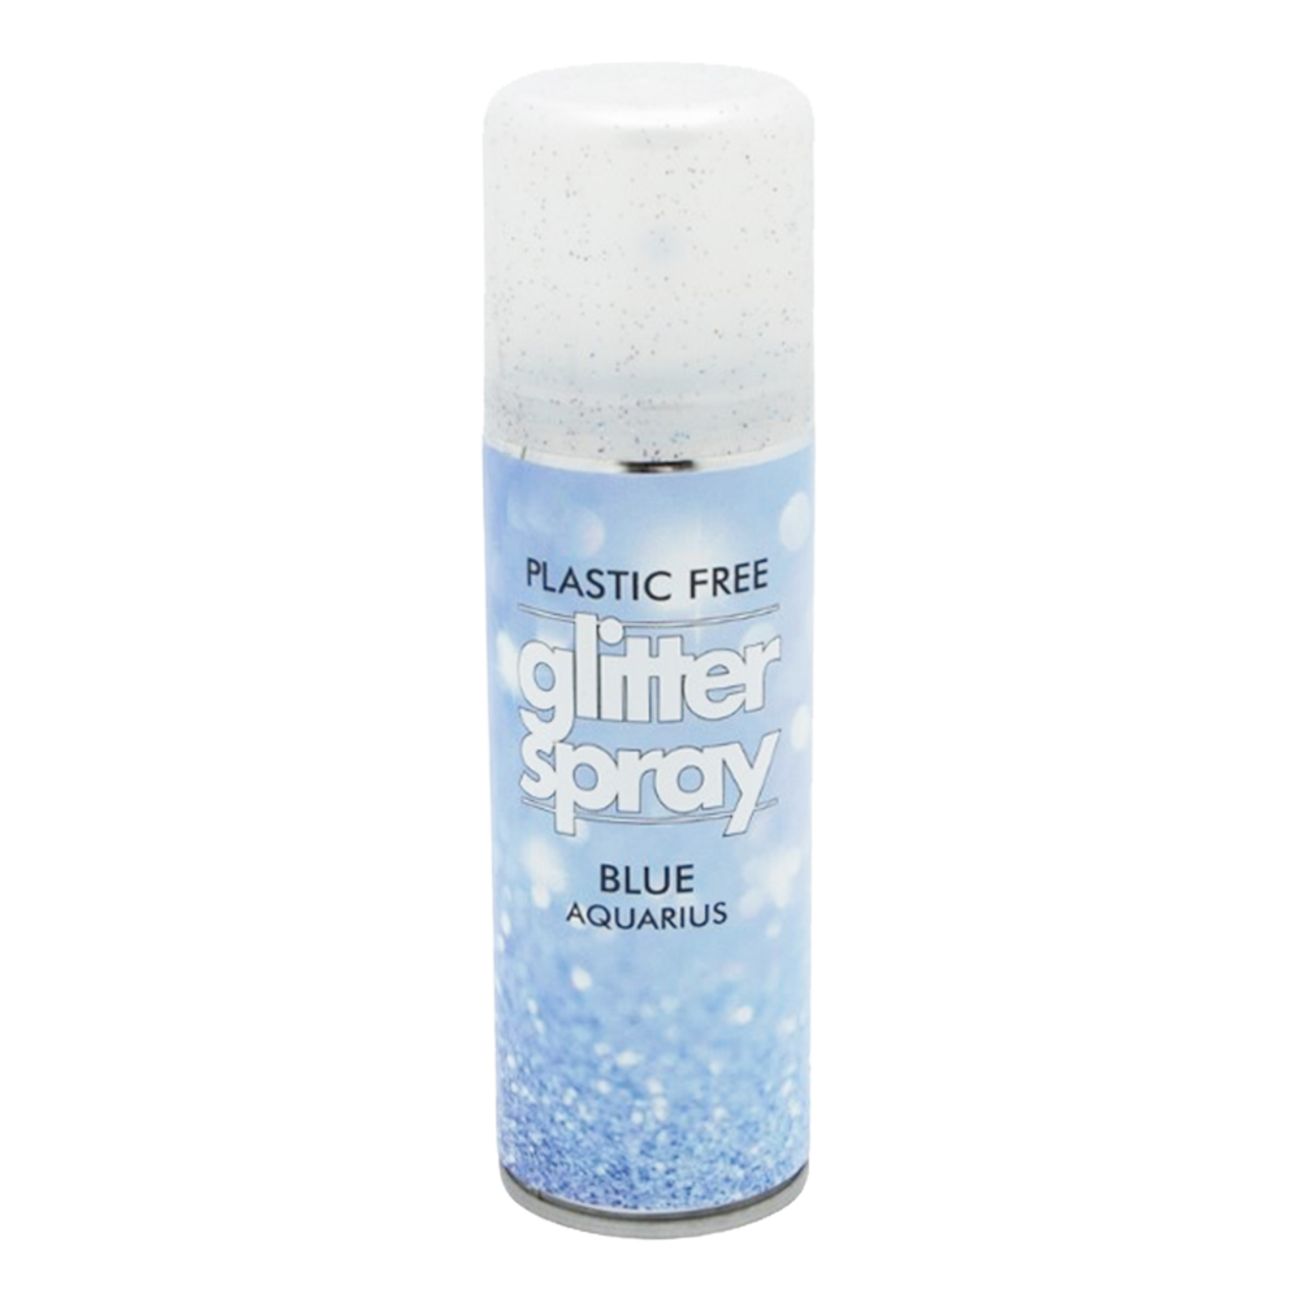 glitterspray-plastfri-98856-5